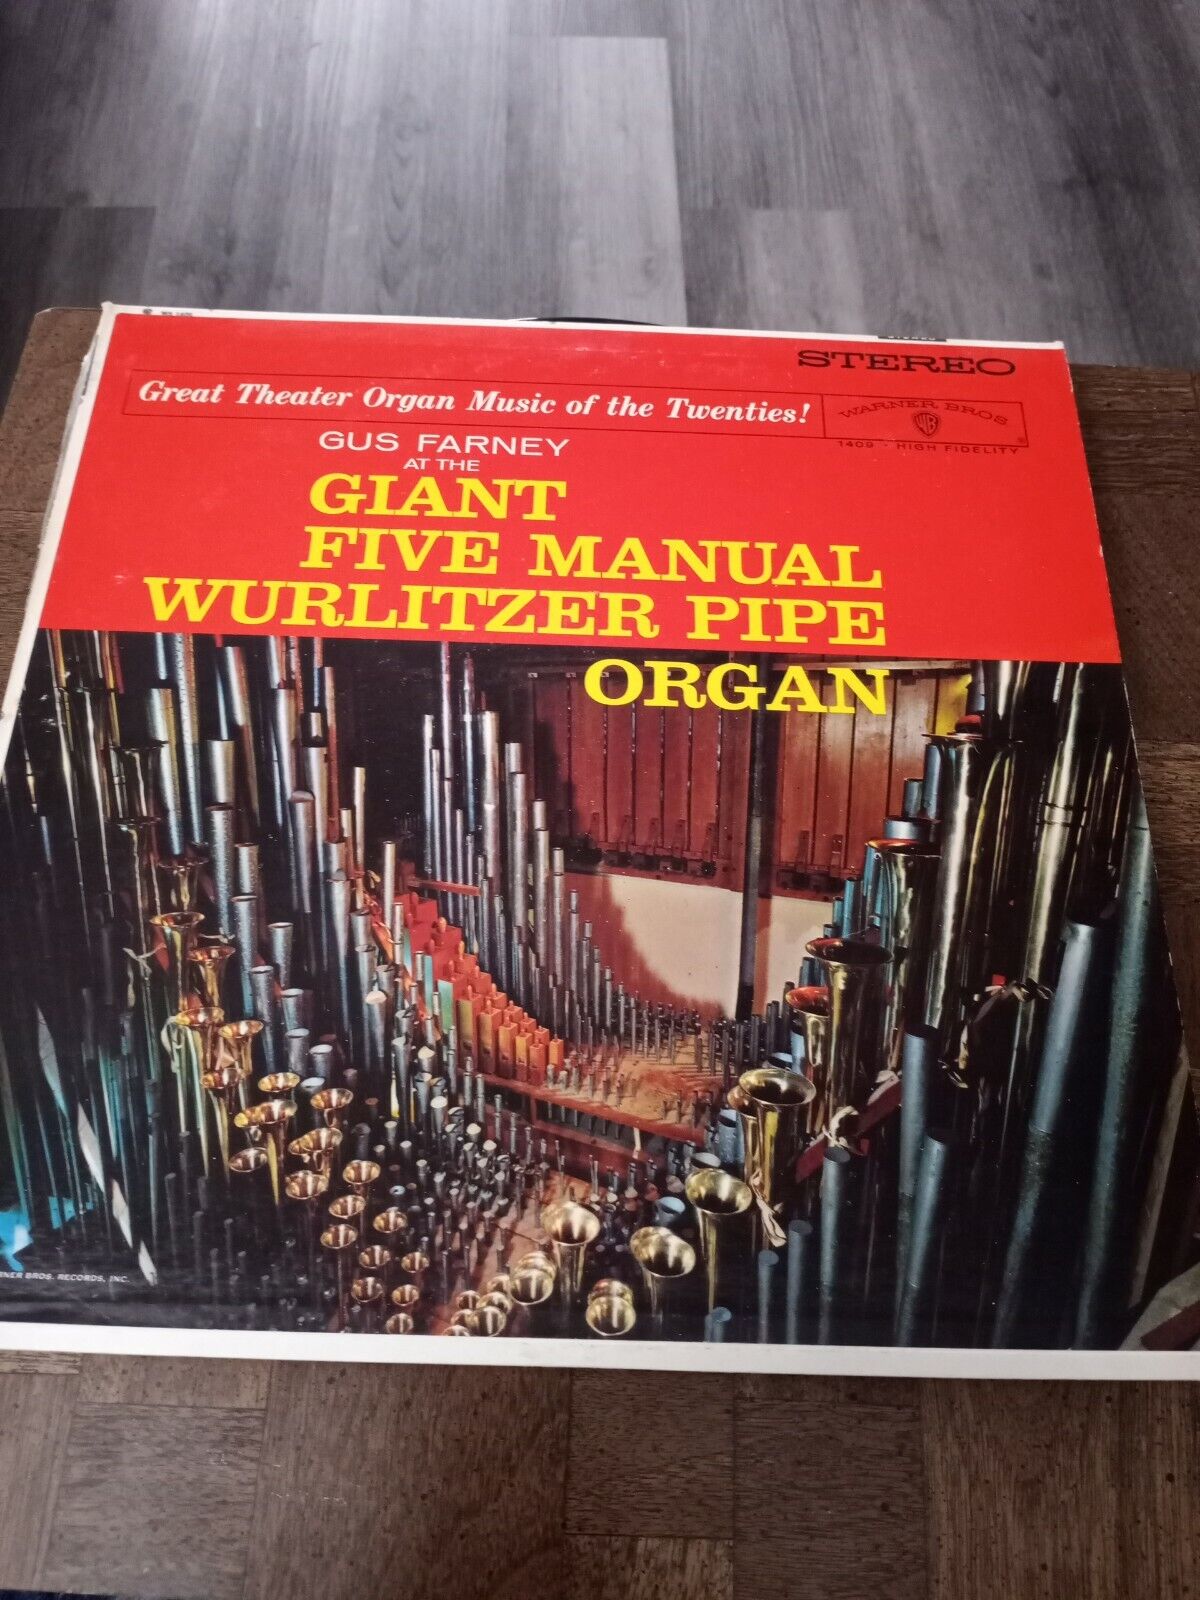 Gus Farney at the Giant 5 Manual Wurlitzer Pipe Organ Warner Bros. Vinyl Record